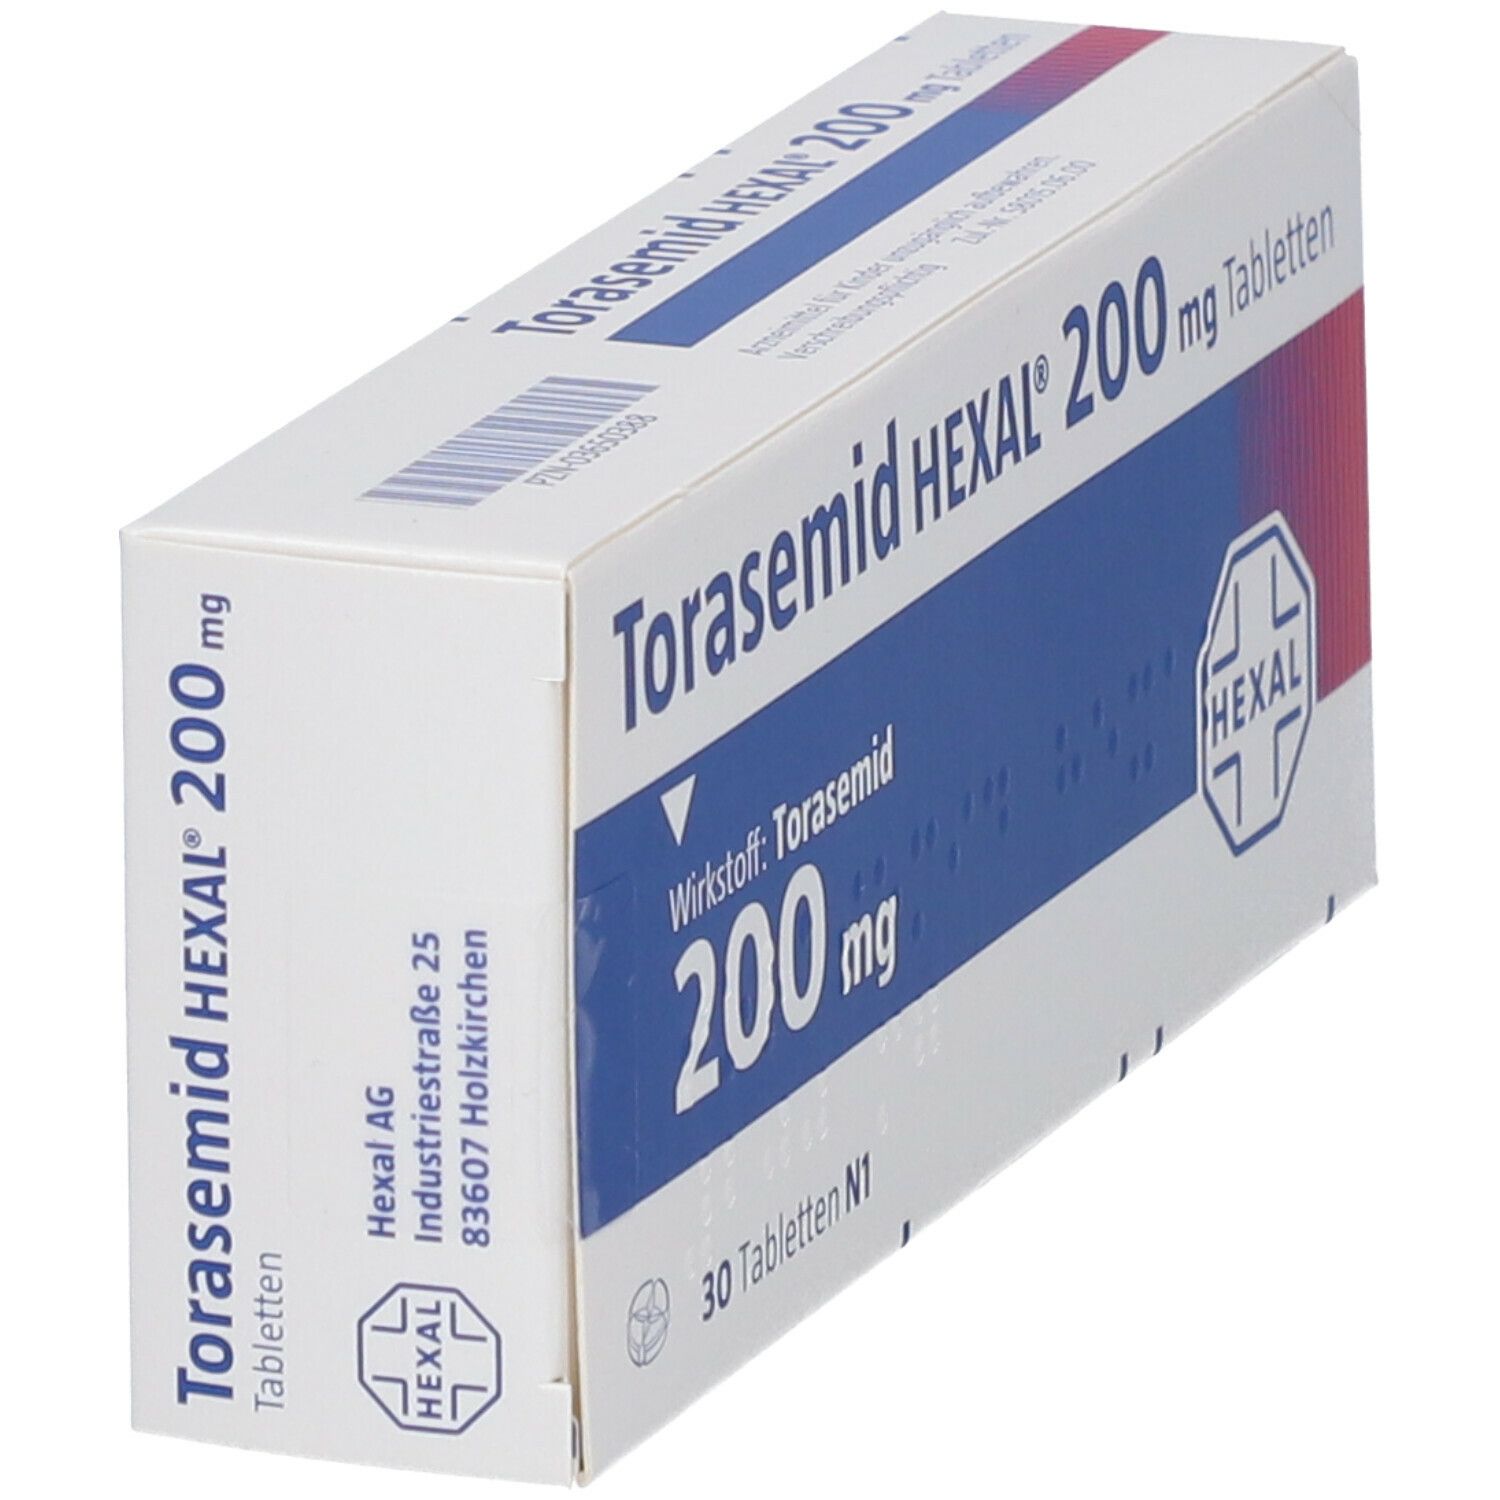 Torasemid HEXAL® 200 mg